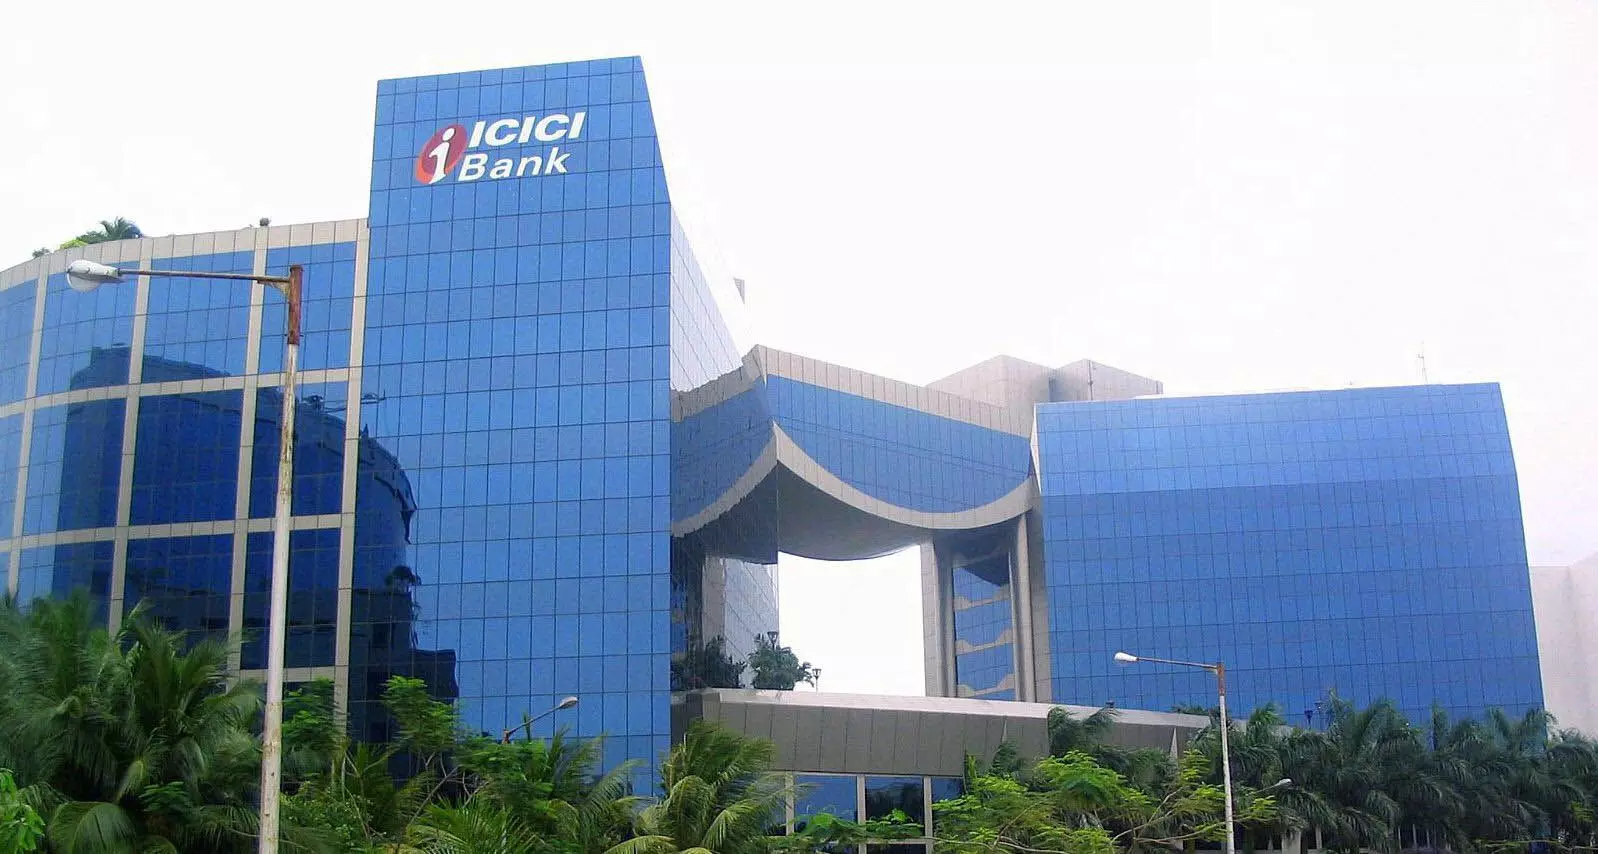 ICICI Bank: Q1 परिणाम अपडेट, 10,875 करोड़ रुपये तक का शुद्ध लाभ दर्ज